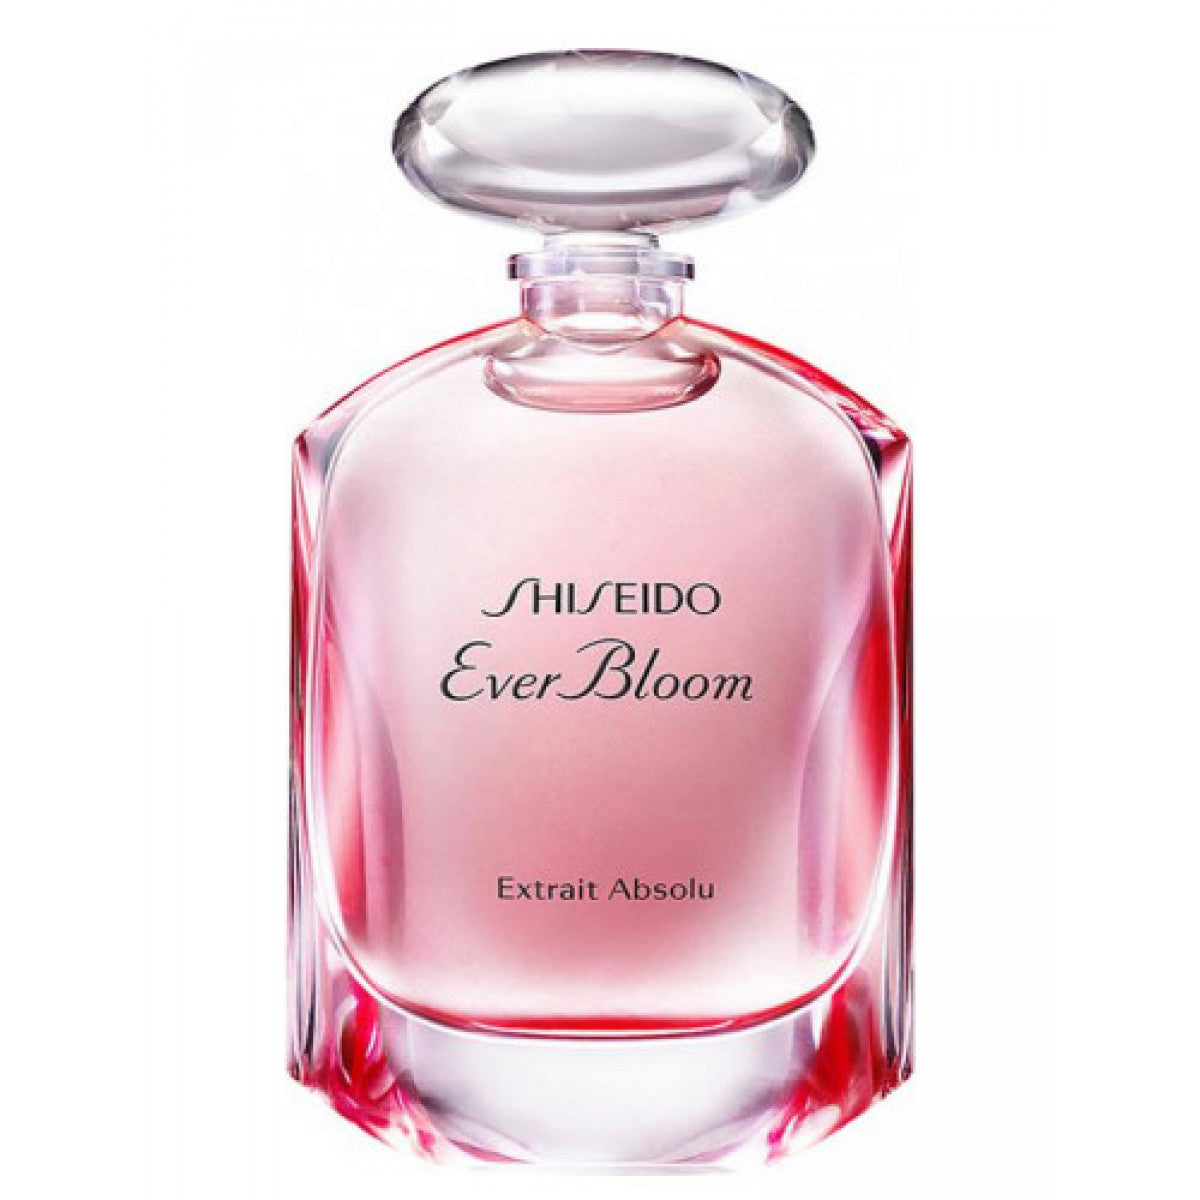 Shiseido Ever Bloom Parfum Splash